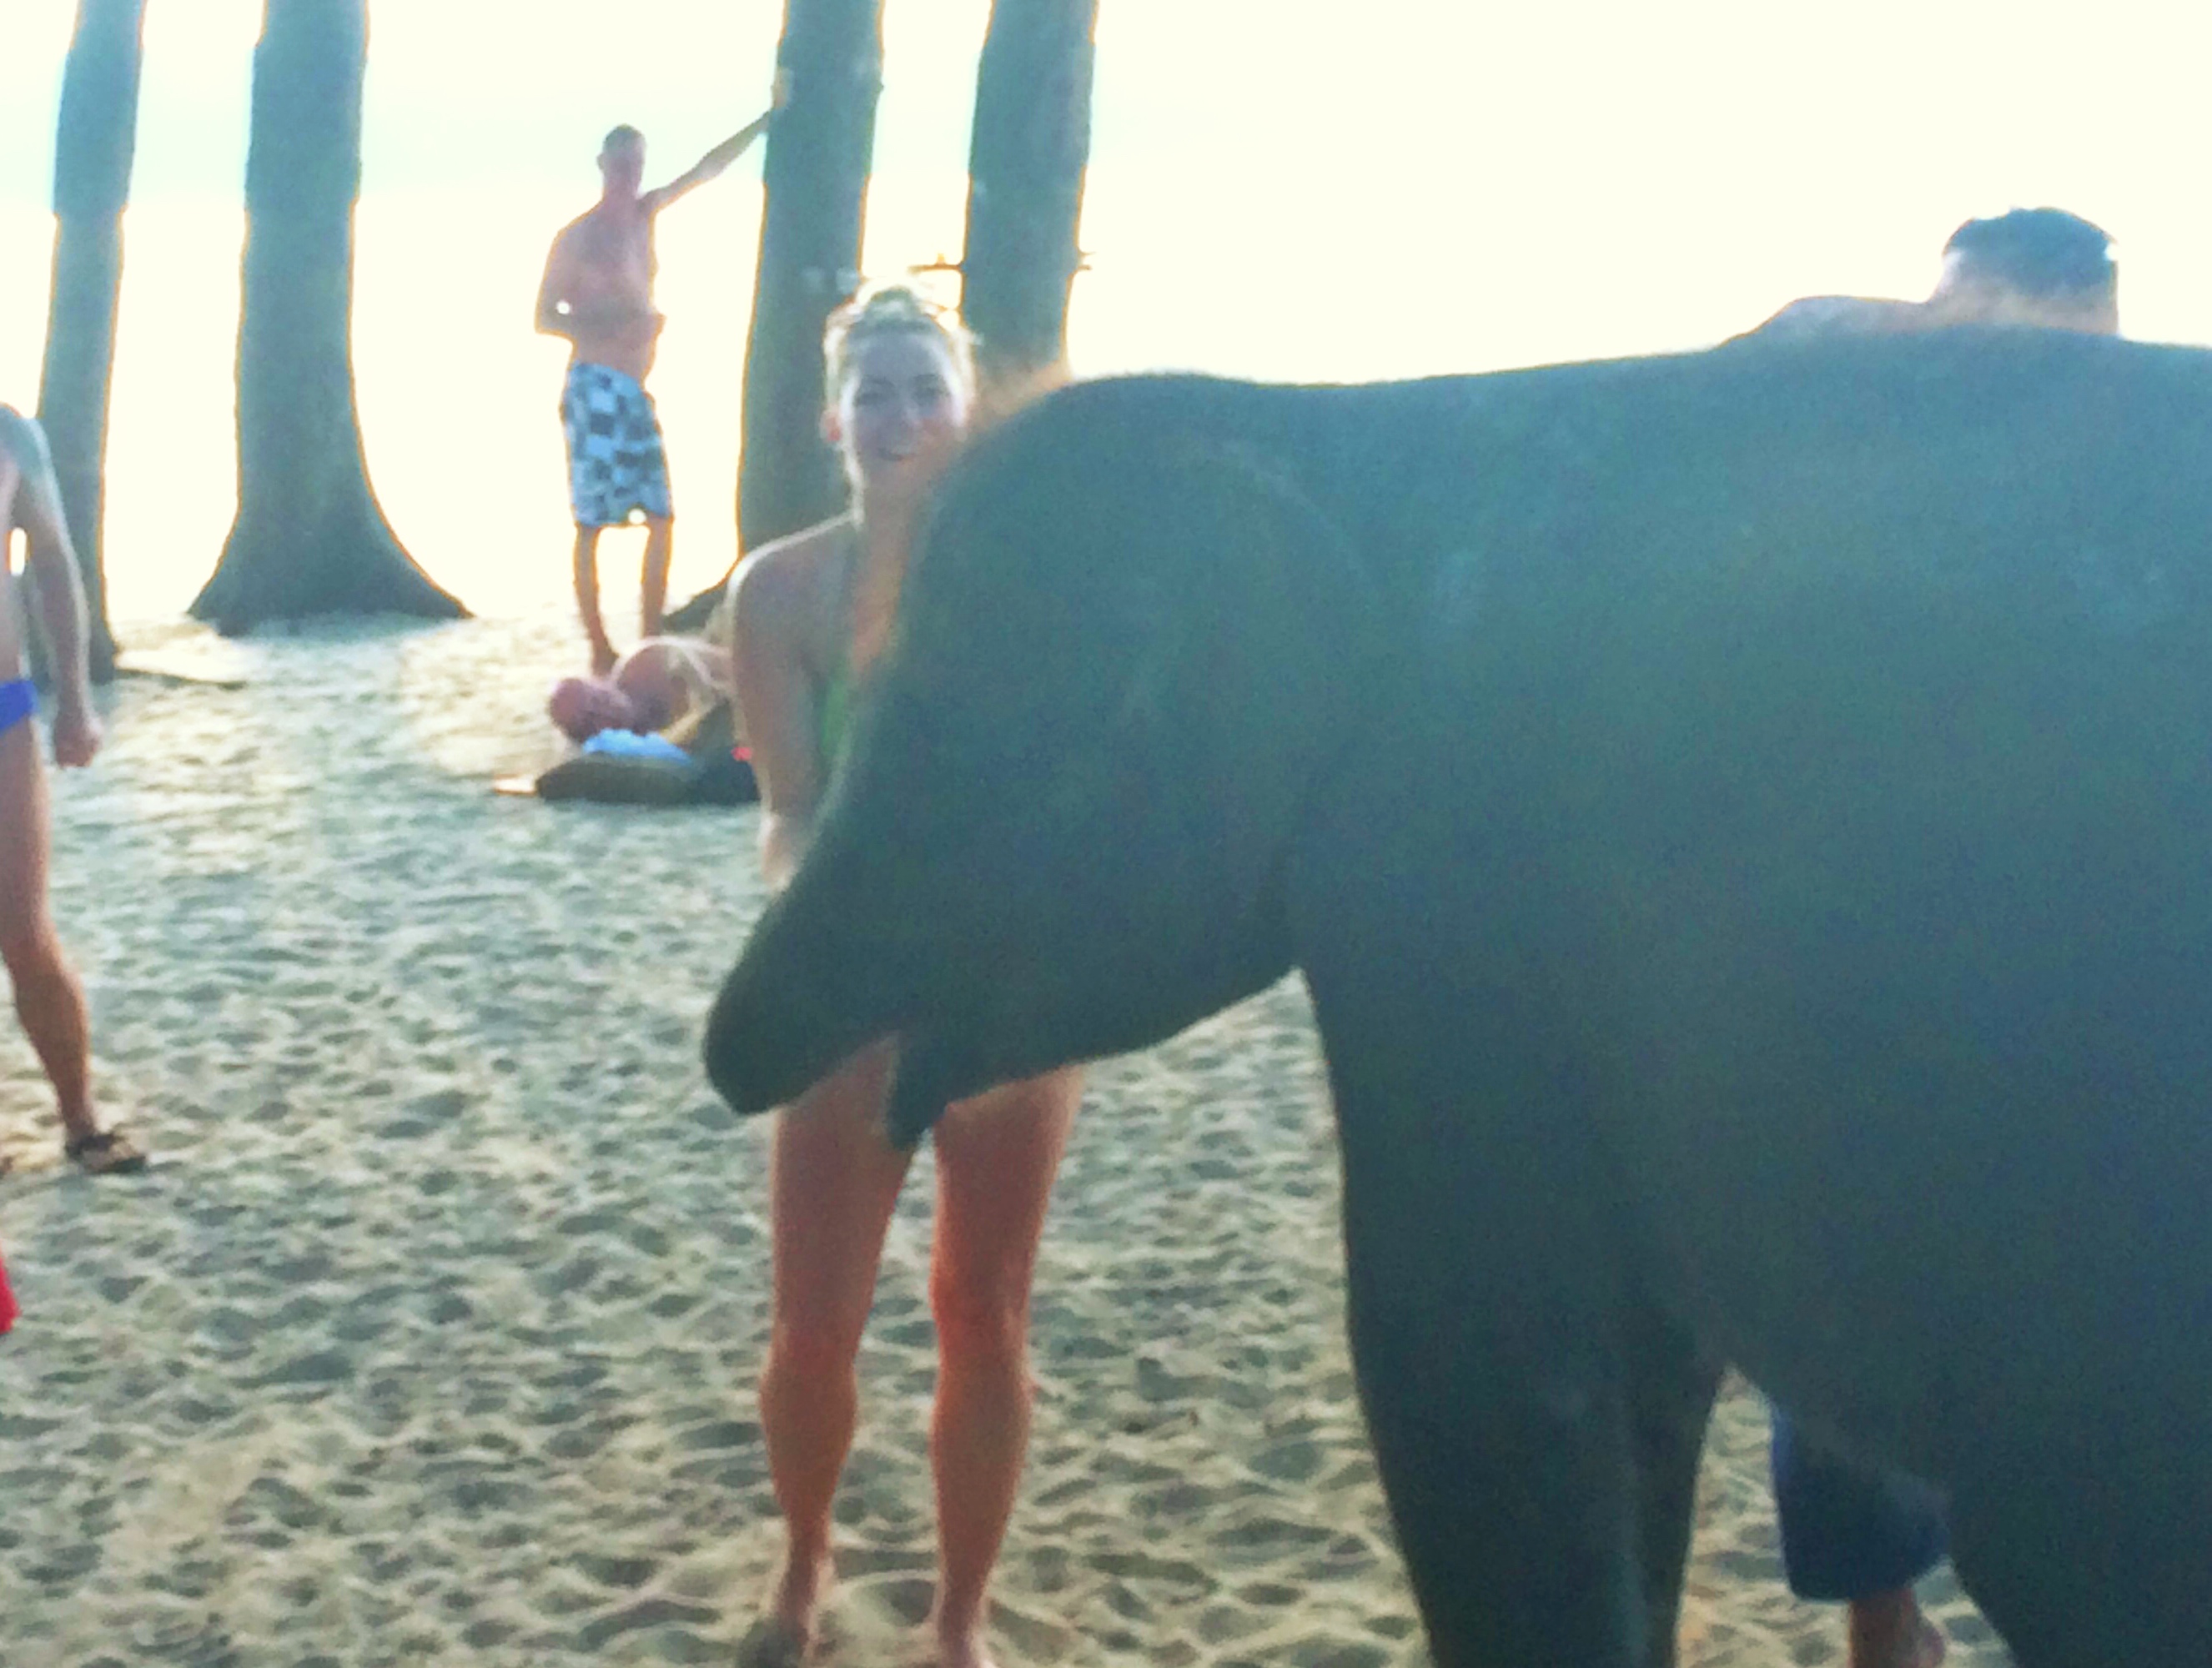 I met an elephant named Candy on the beach 